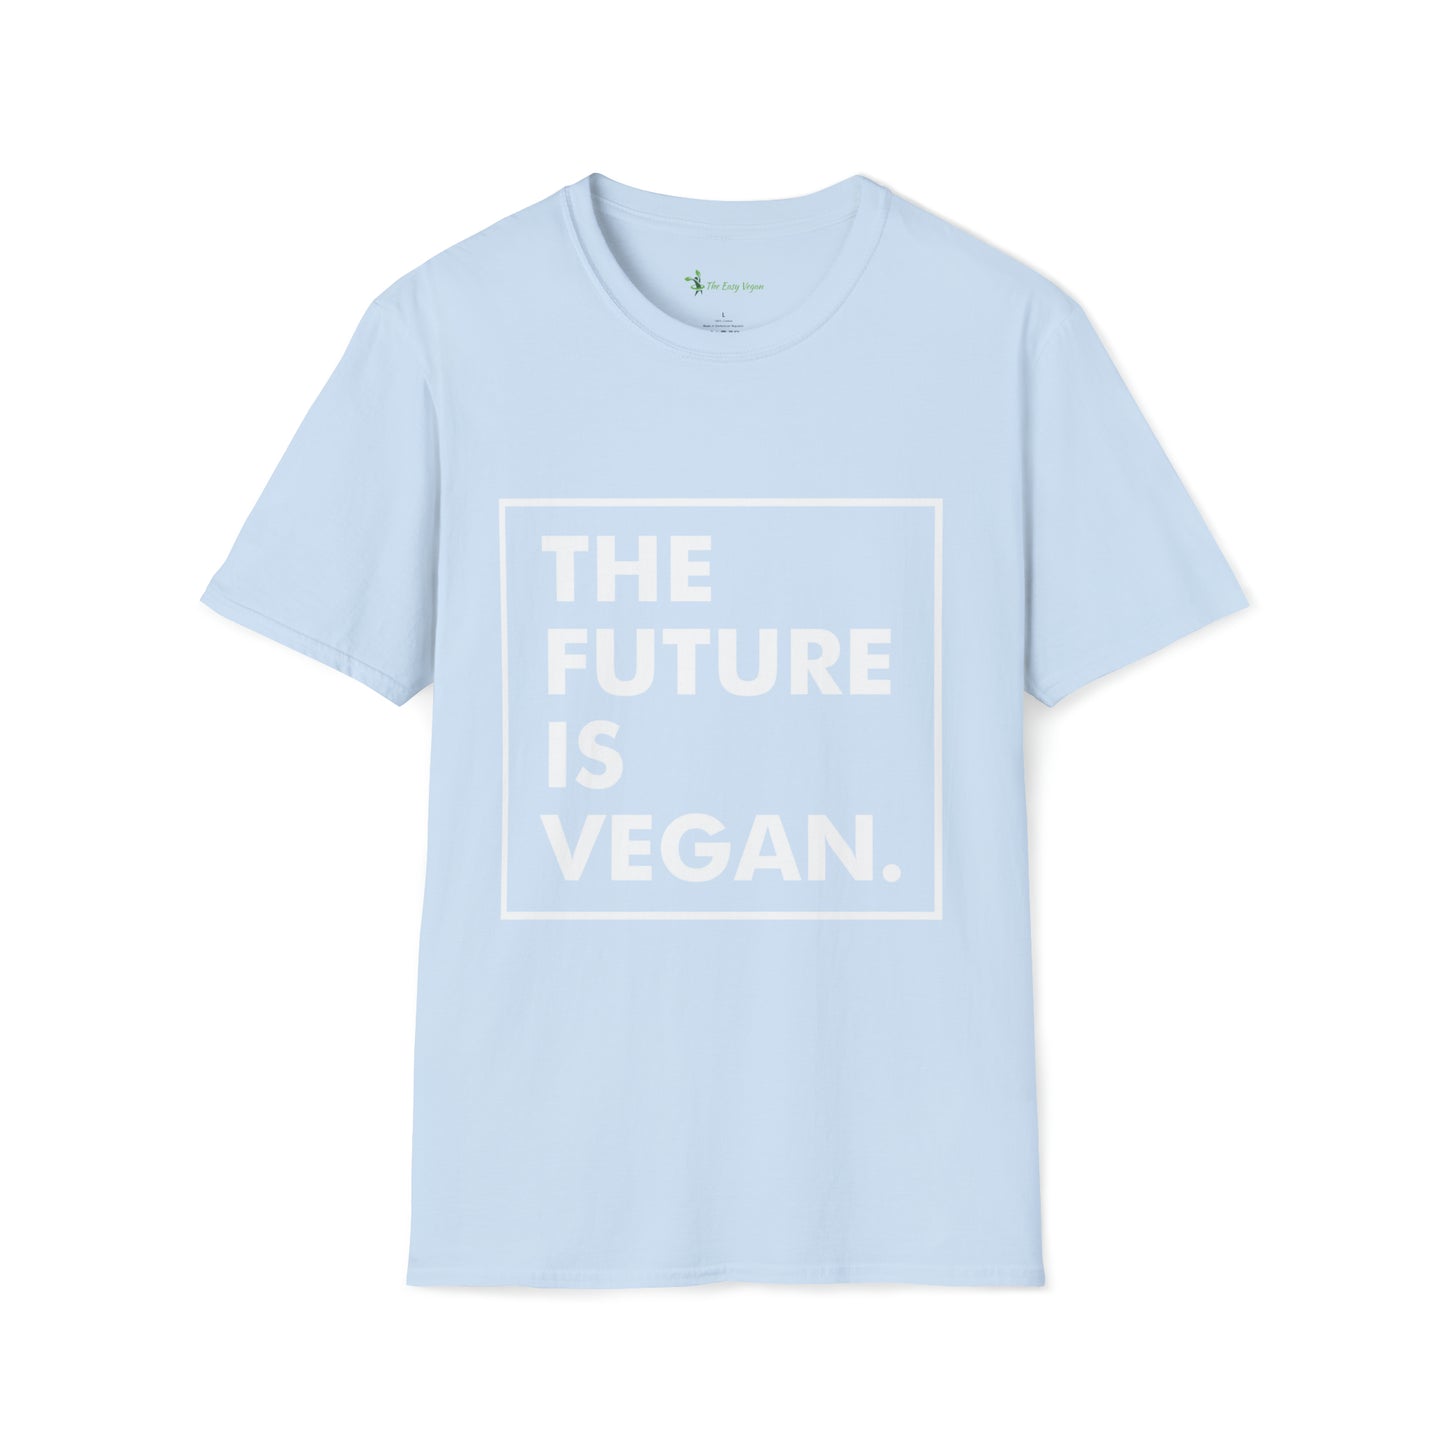 The Future is Vegan T-shirt